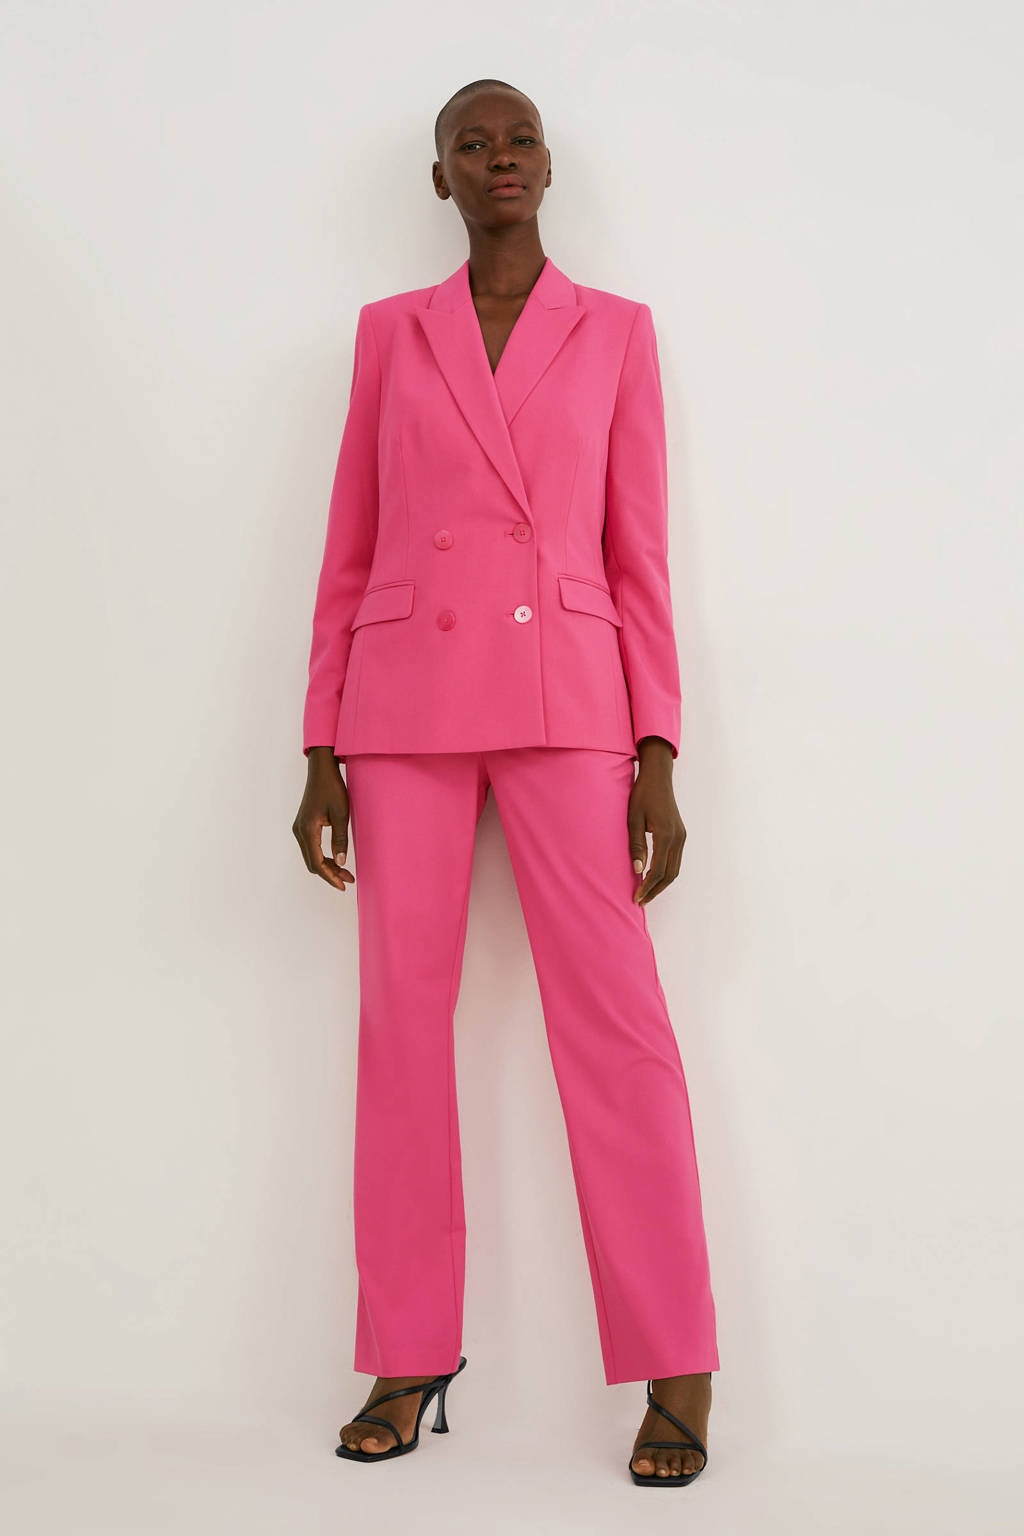 Roze dames C&A blazer van polyester met lange mouwen, reverskraag en double breasted sluiting